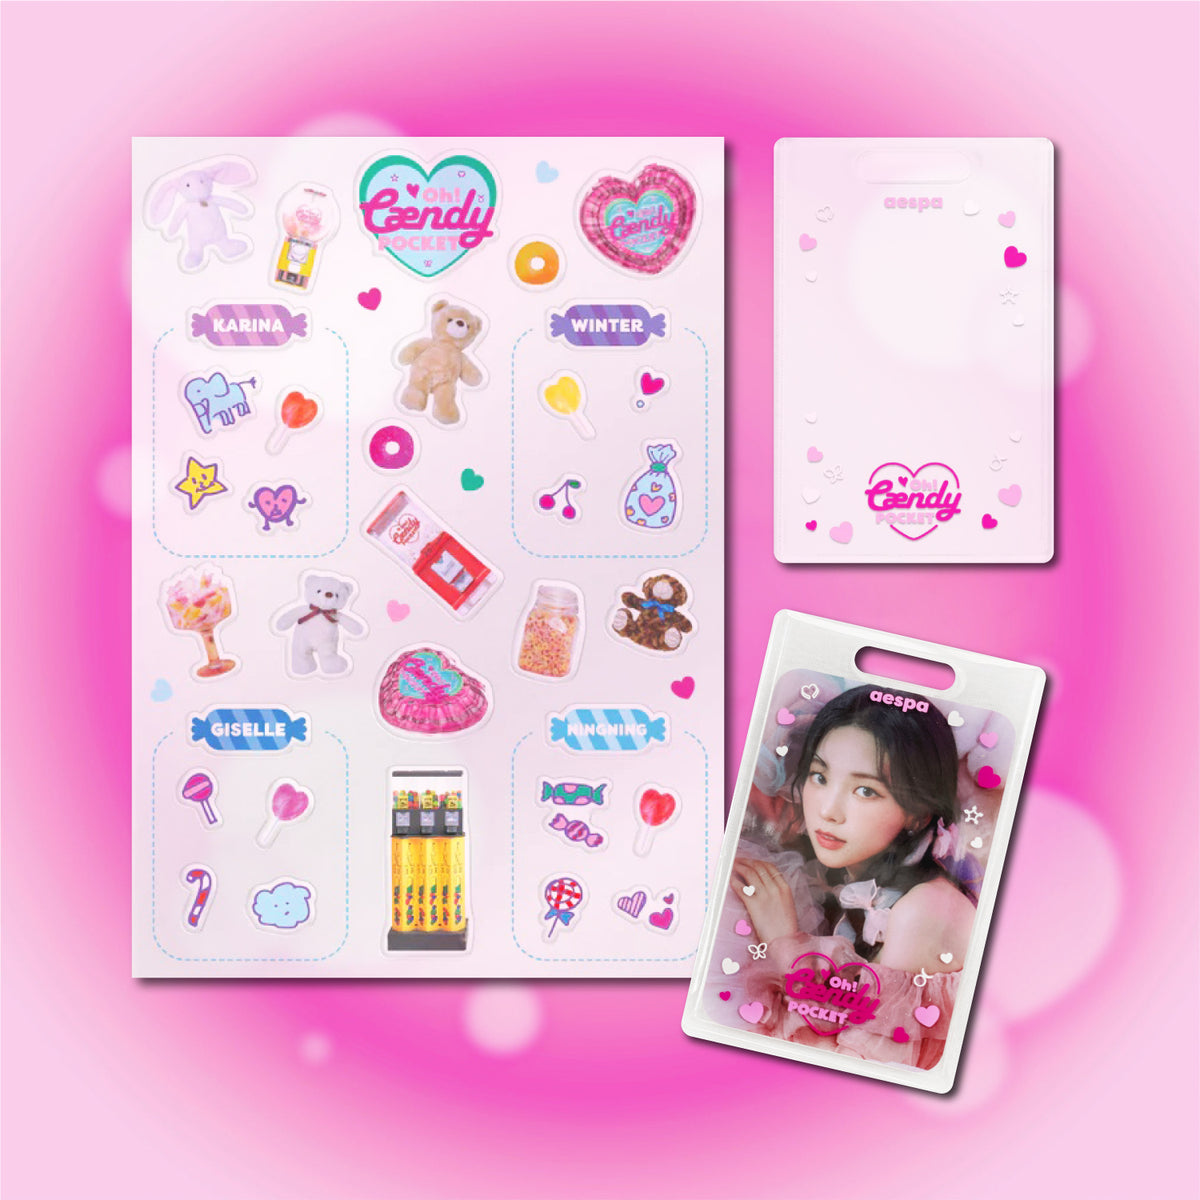 aespa Oh! Caendy Pocket Part.1 Official Merchandise - Photo Holder & S –  Choice Music LA